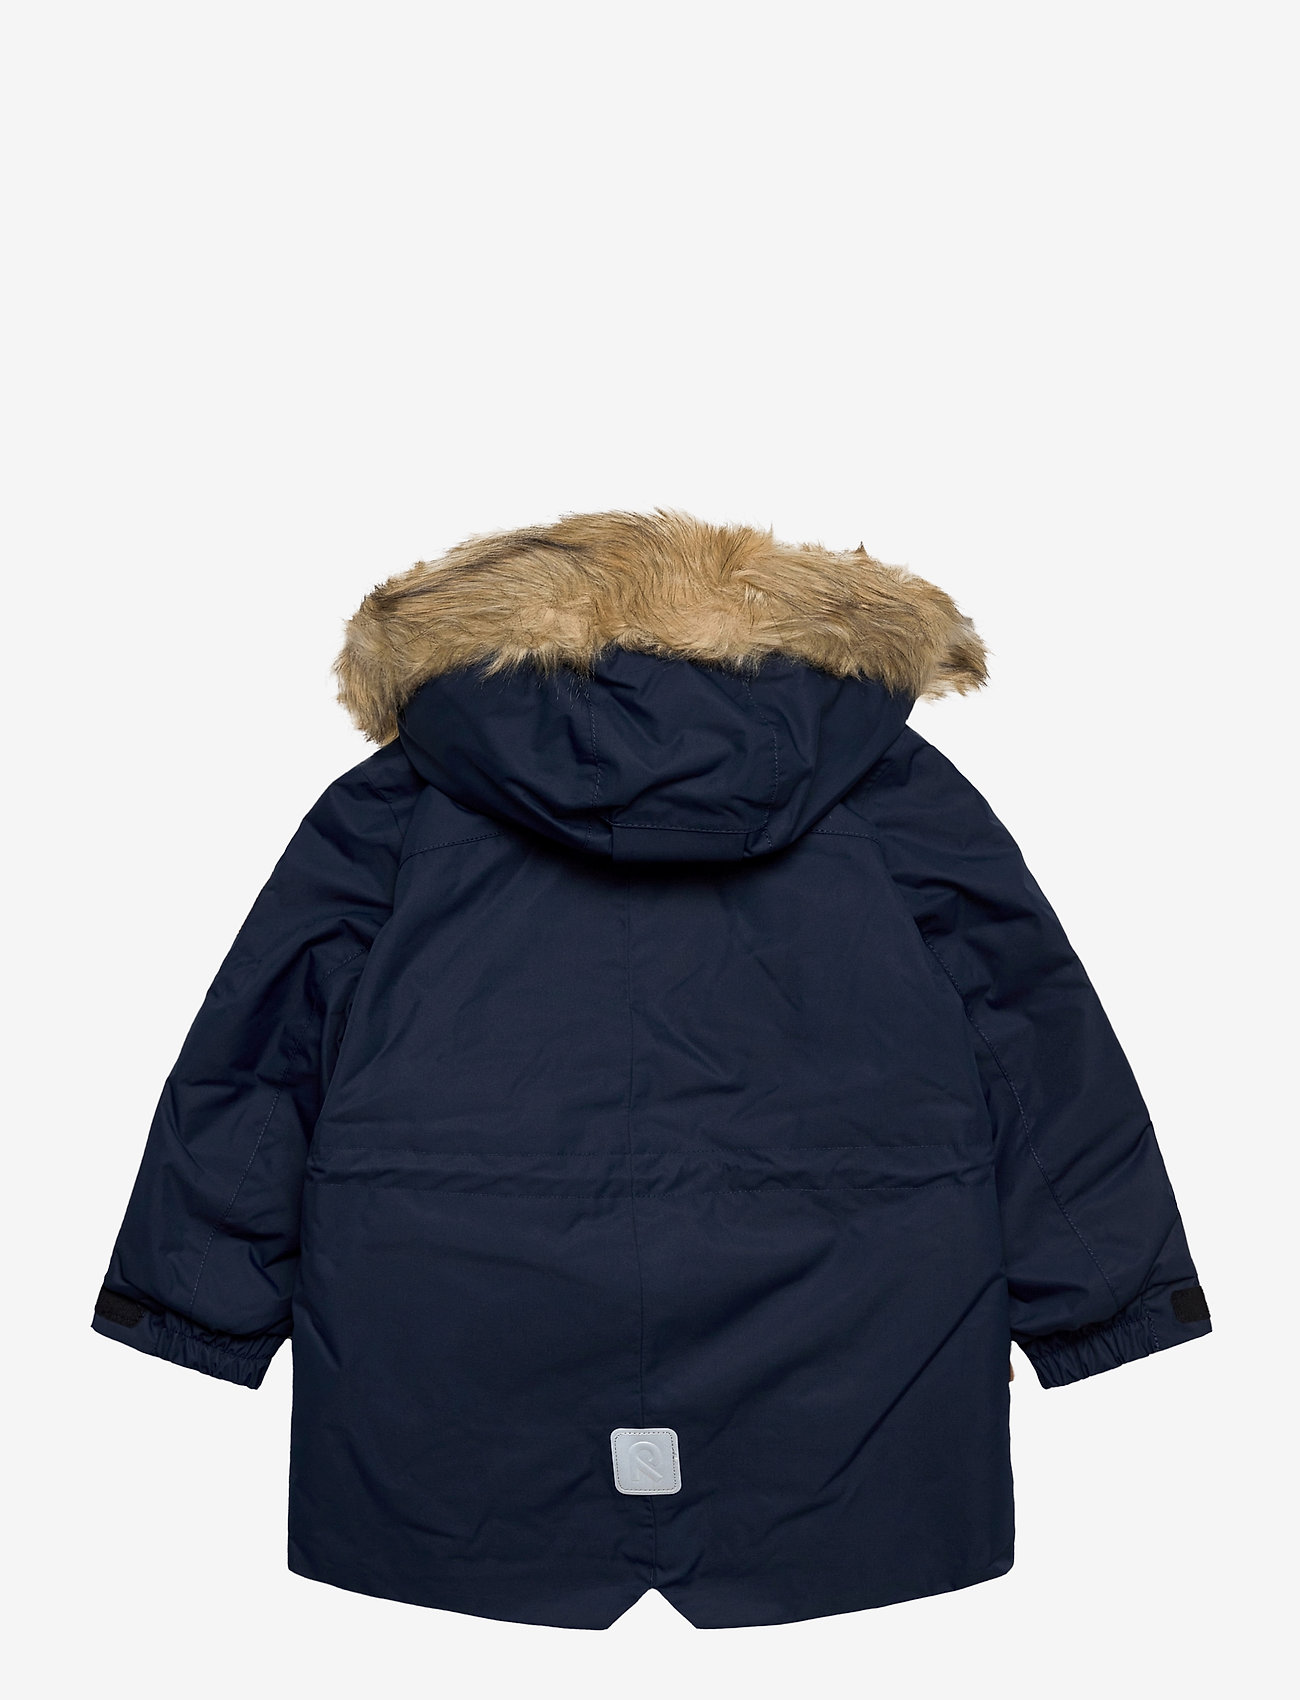 Reima - Kids' winter parka Naapuri - insulated jackets - navy - 1